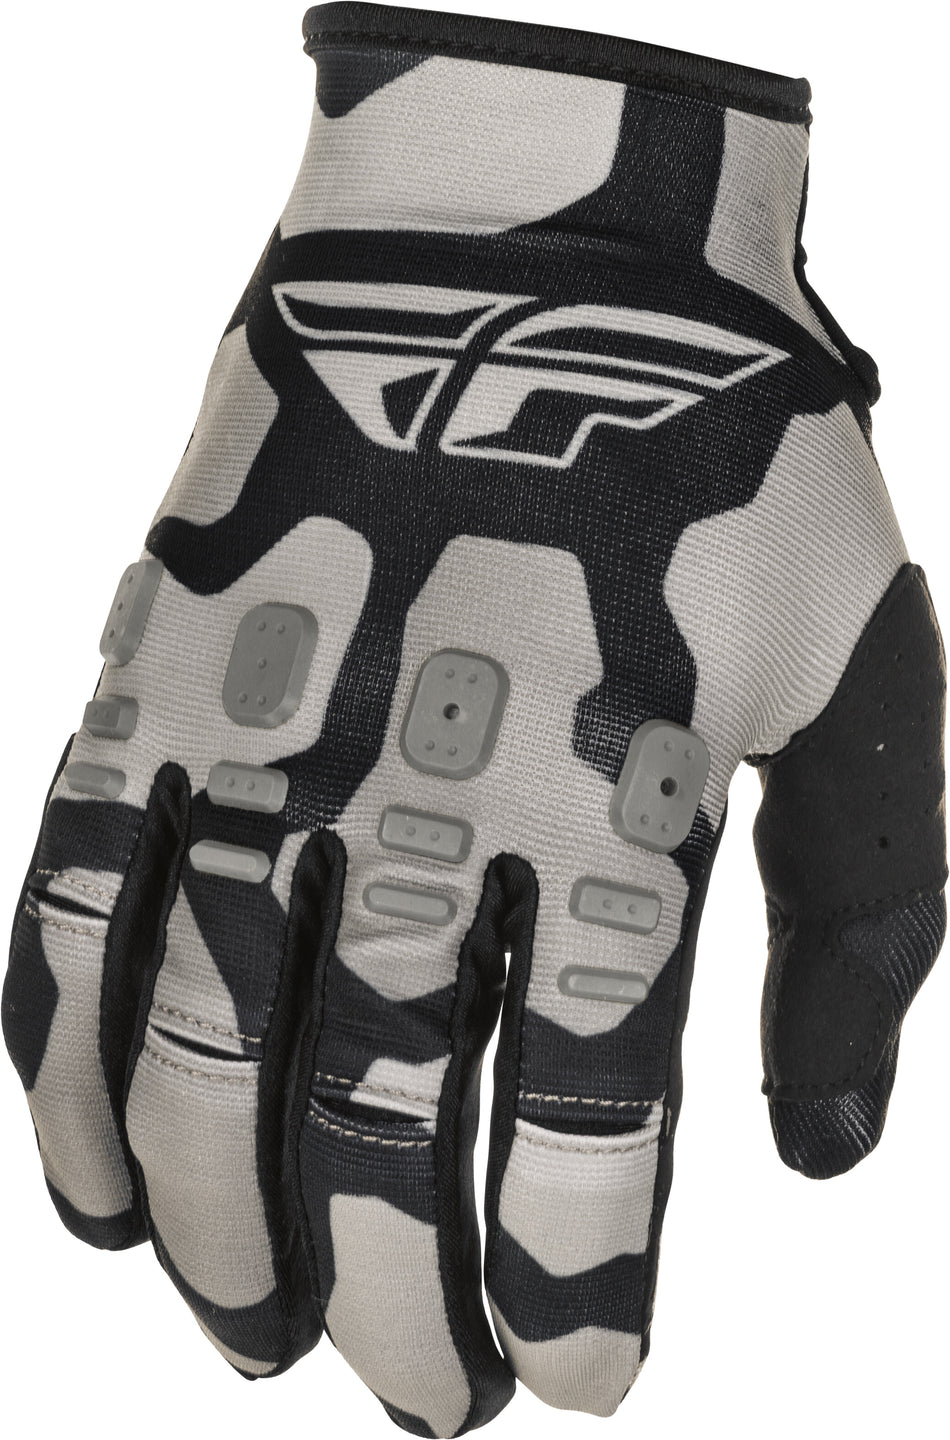 FLY RACING Kinetic K221 Gloves Black/Grey Sz 10 374-51010